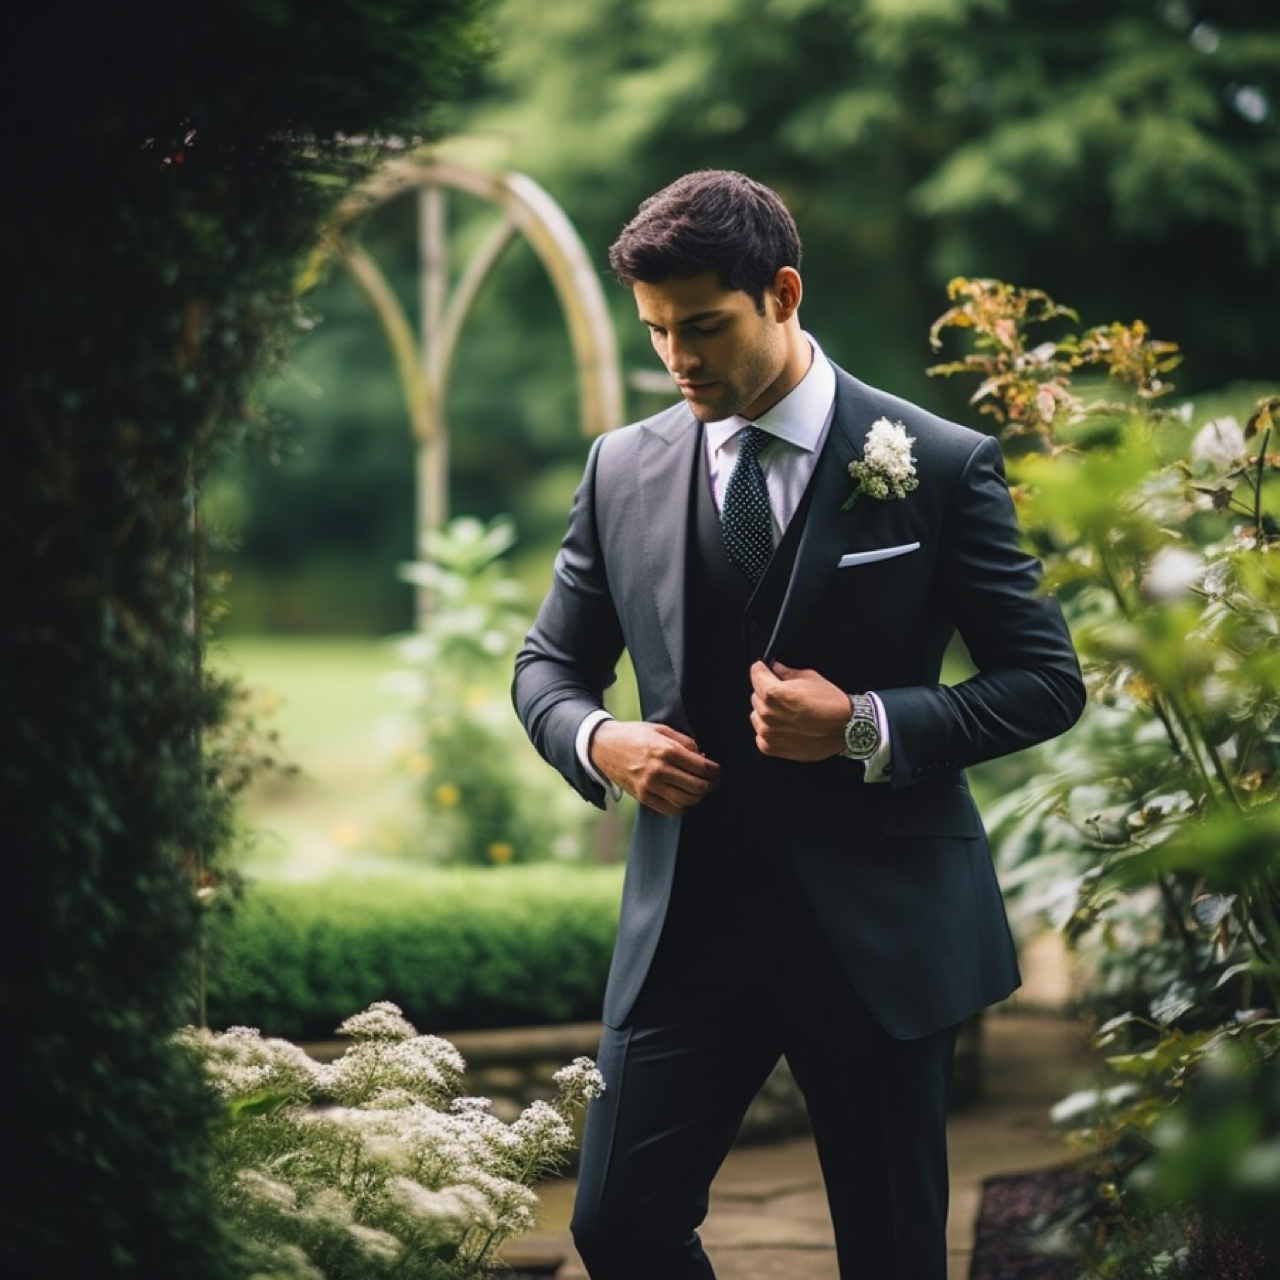 A man wearing a wedding bespoke suit